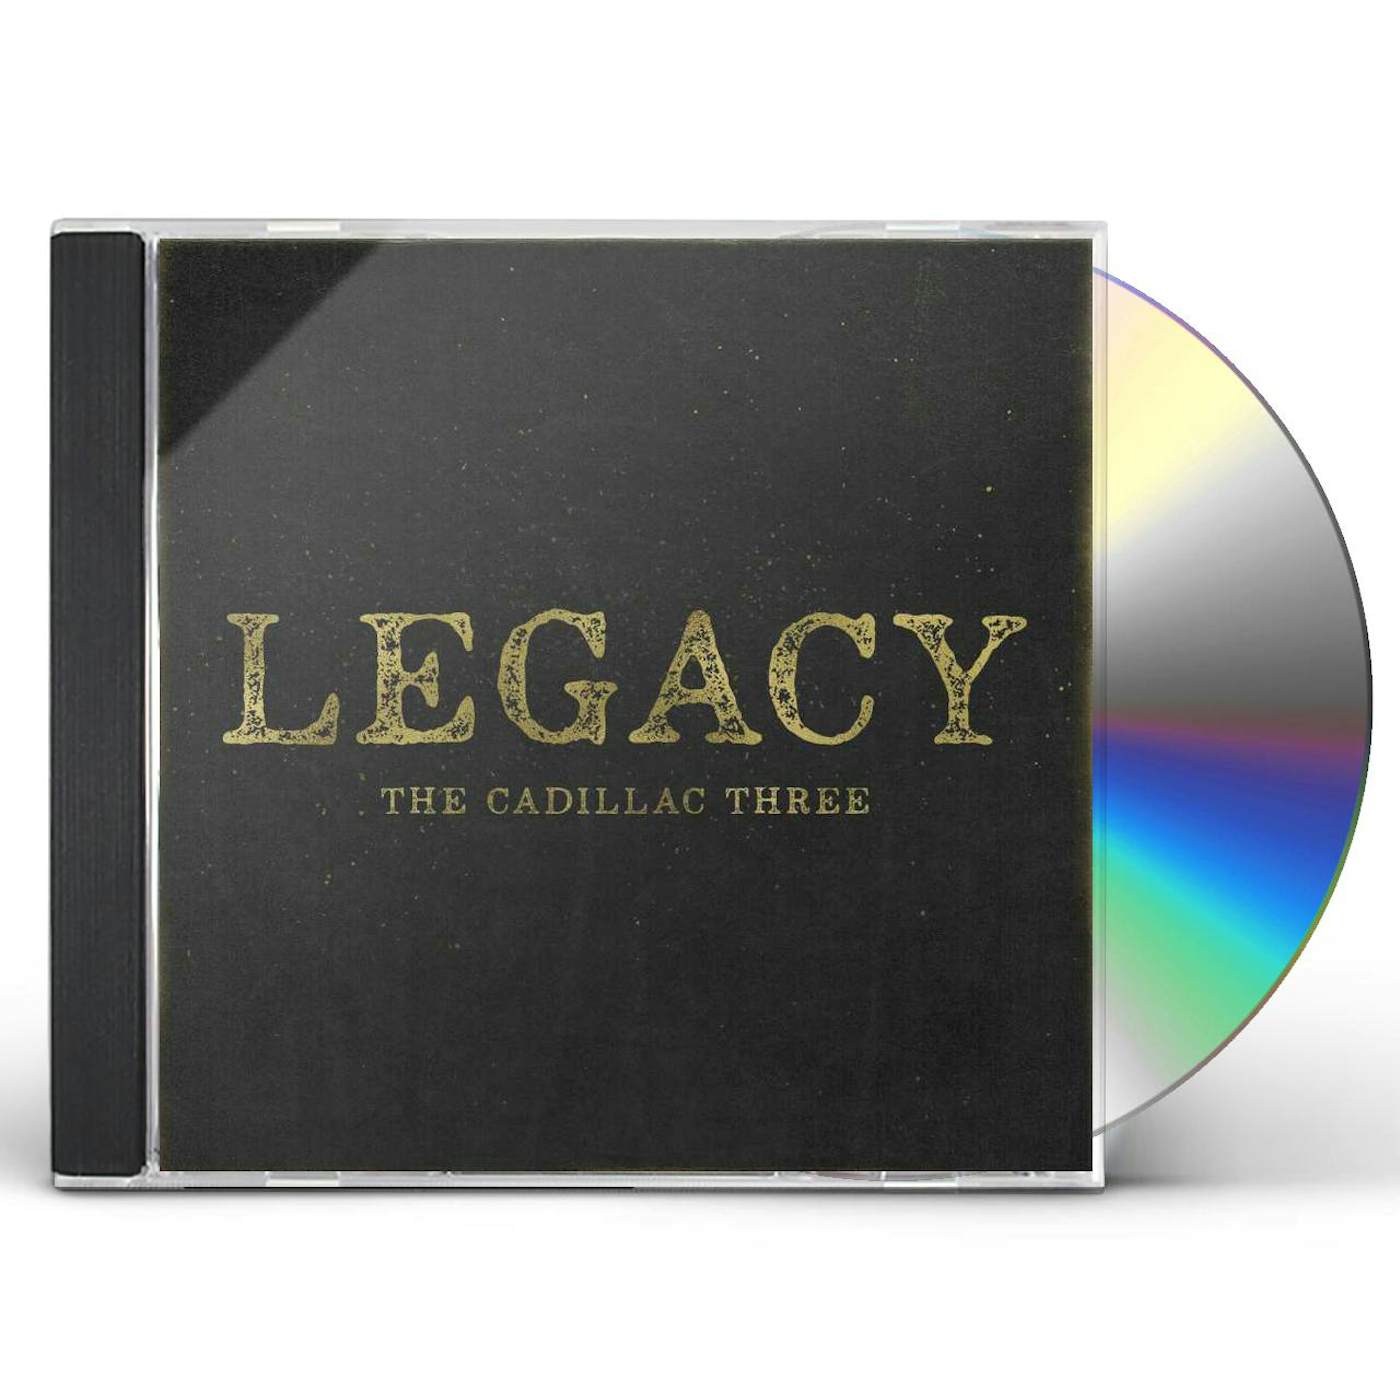 The Cadillac Three LEGACY CD